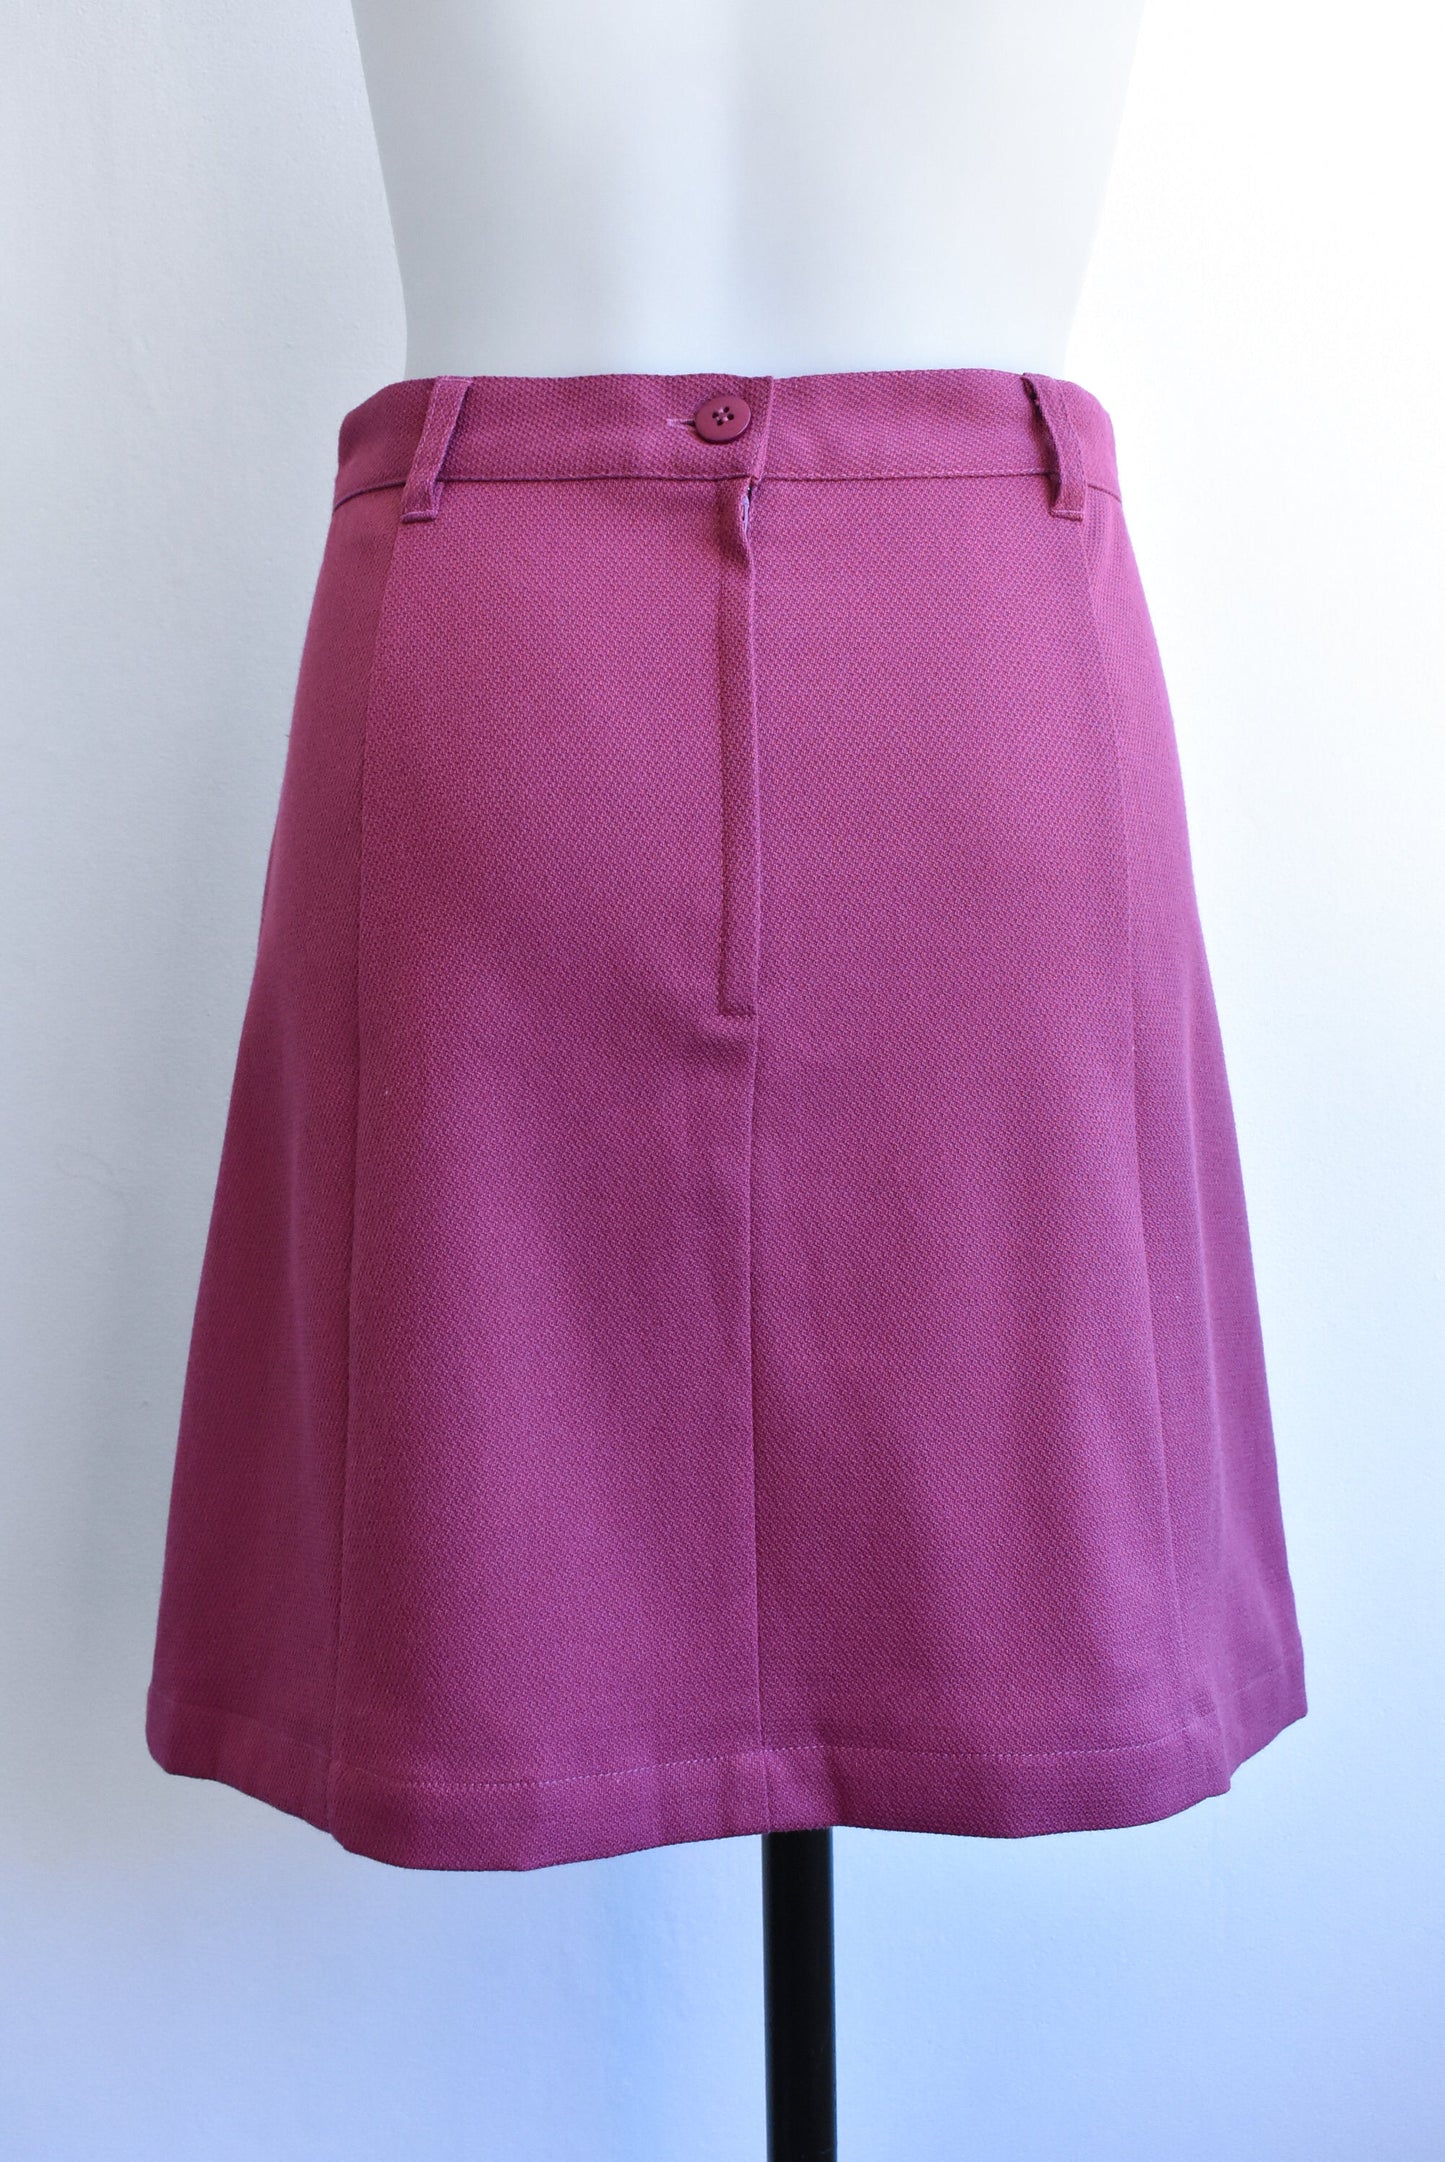 Princess Highway cherry pink miniskirt, size S-M